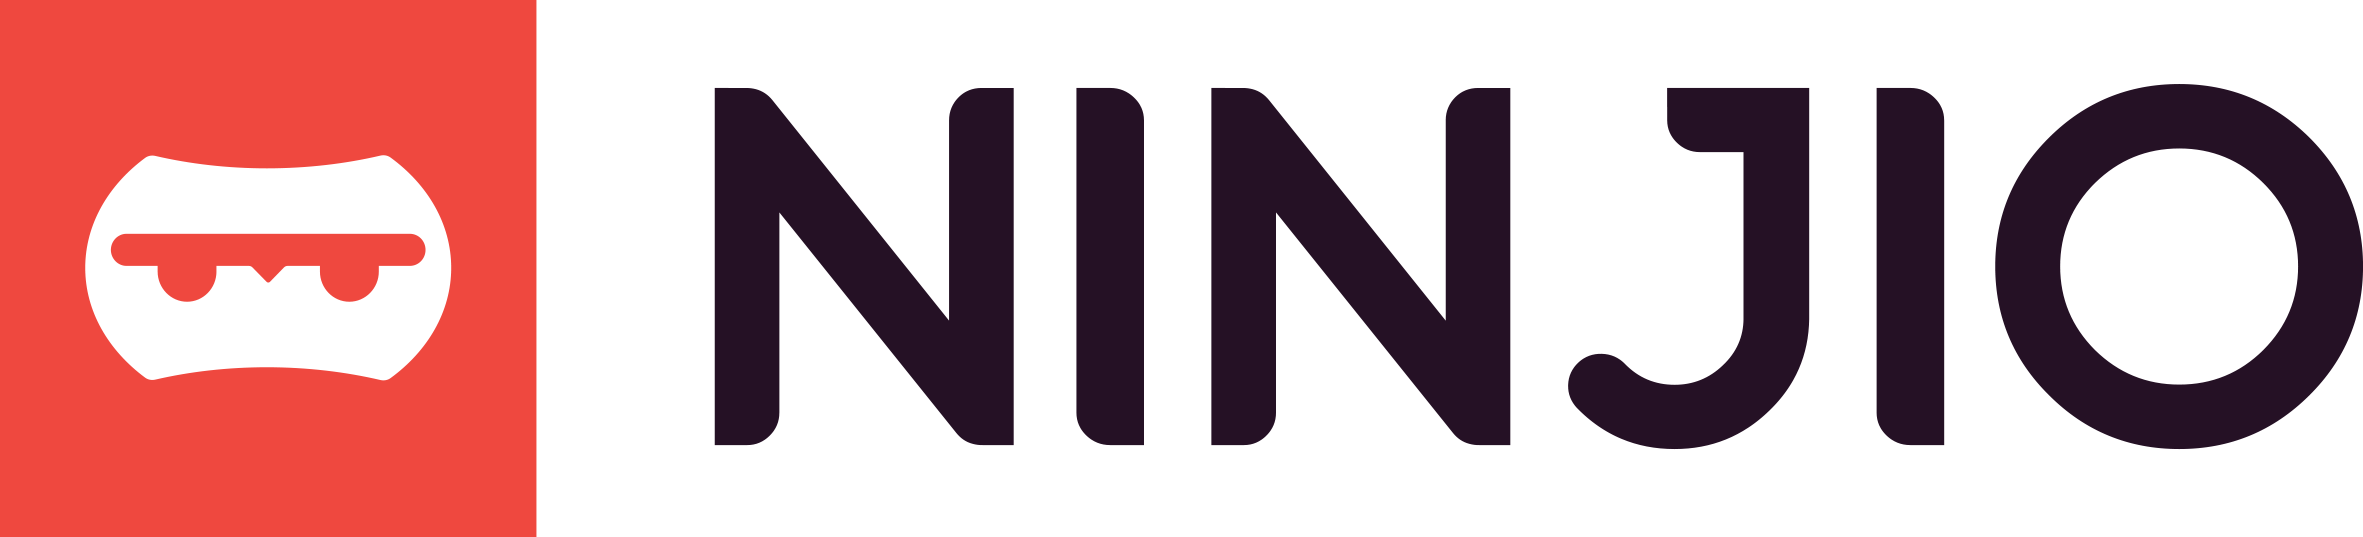 NINJIO logo